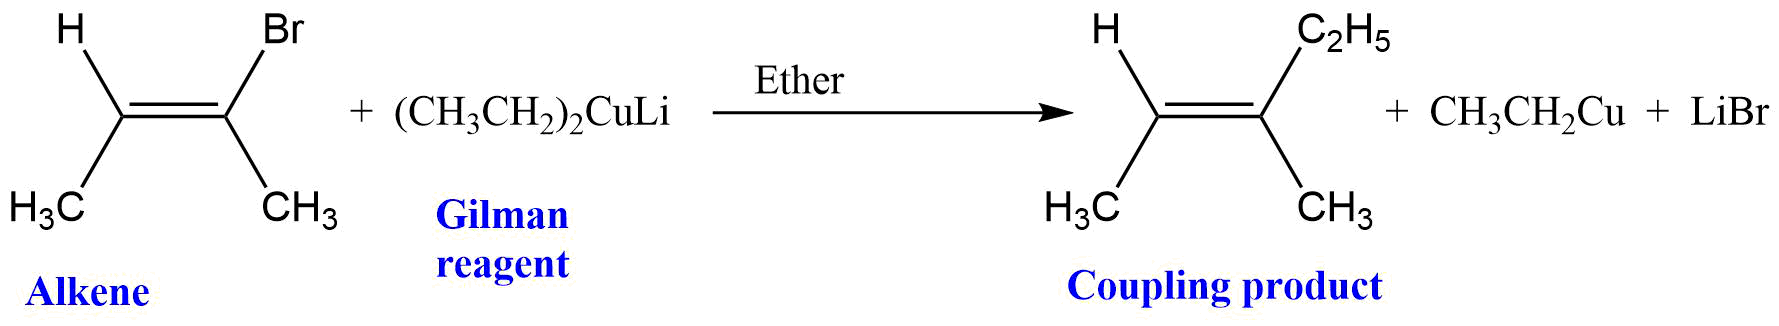 Reaction of Gilman reagent with vinyl halide